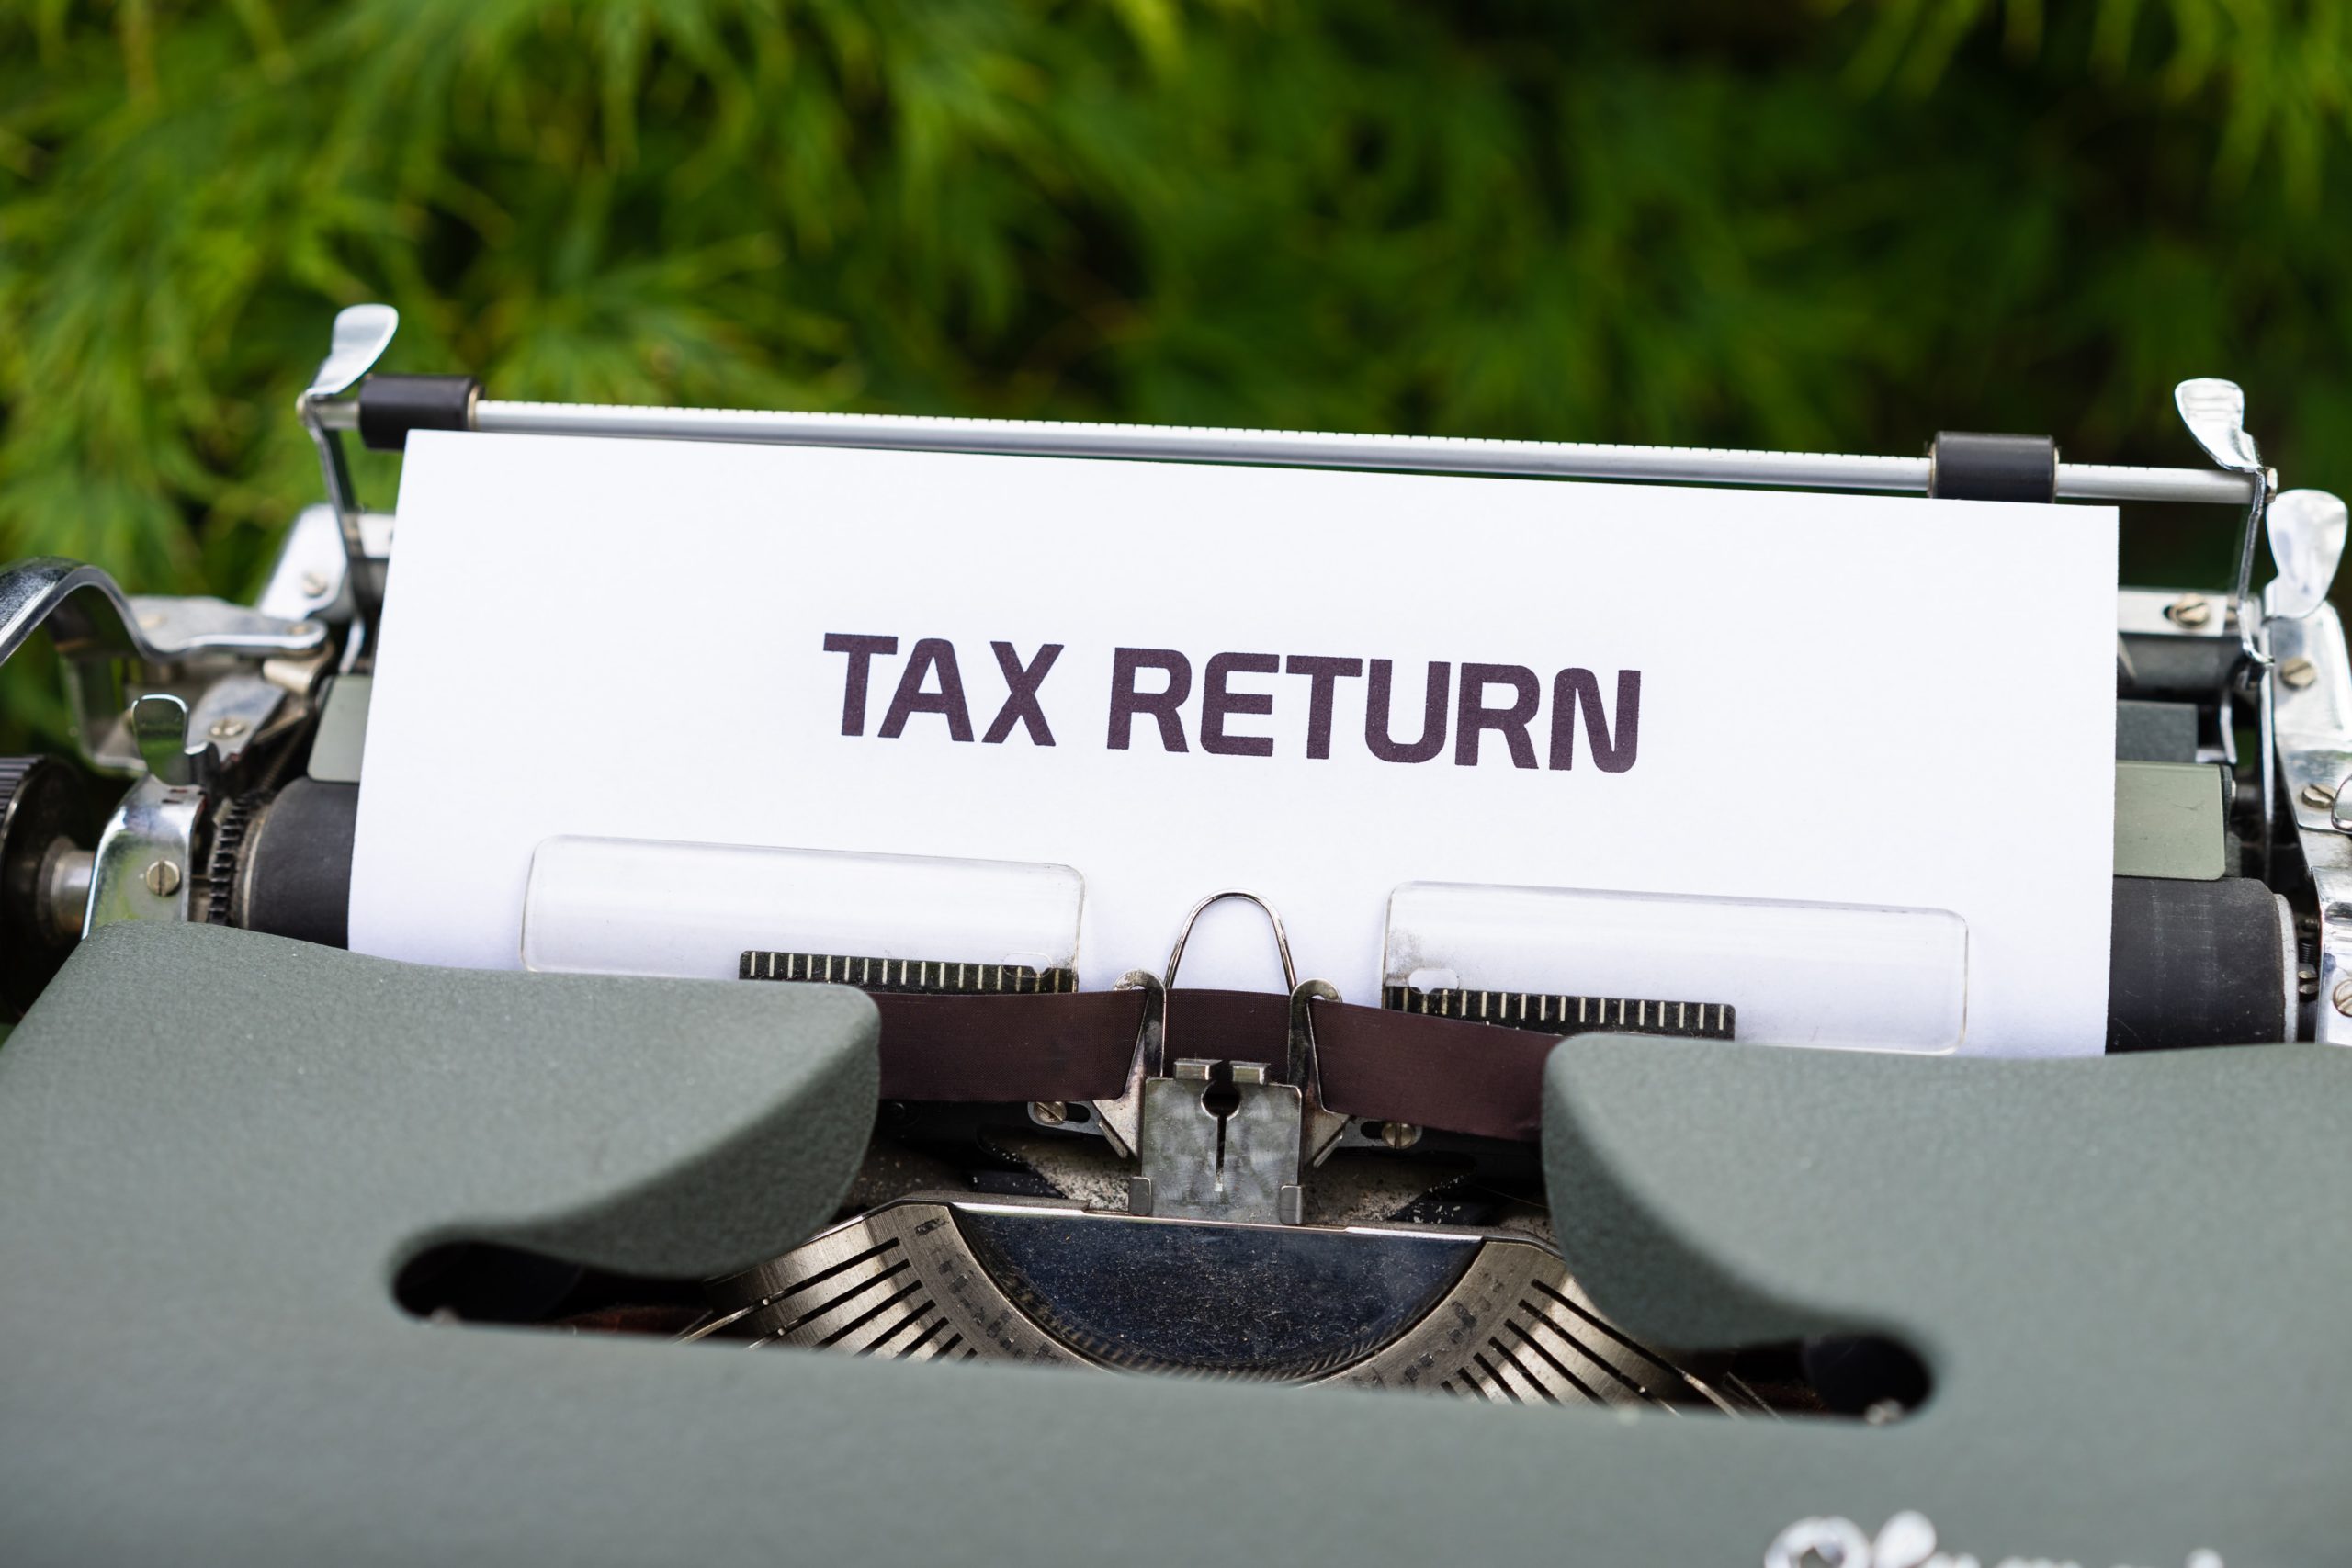 Tax return written on paper